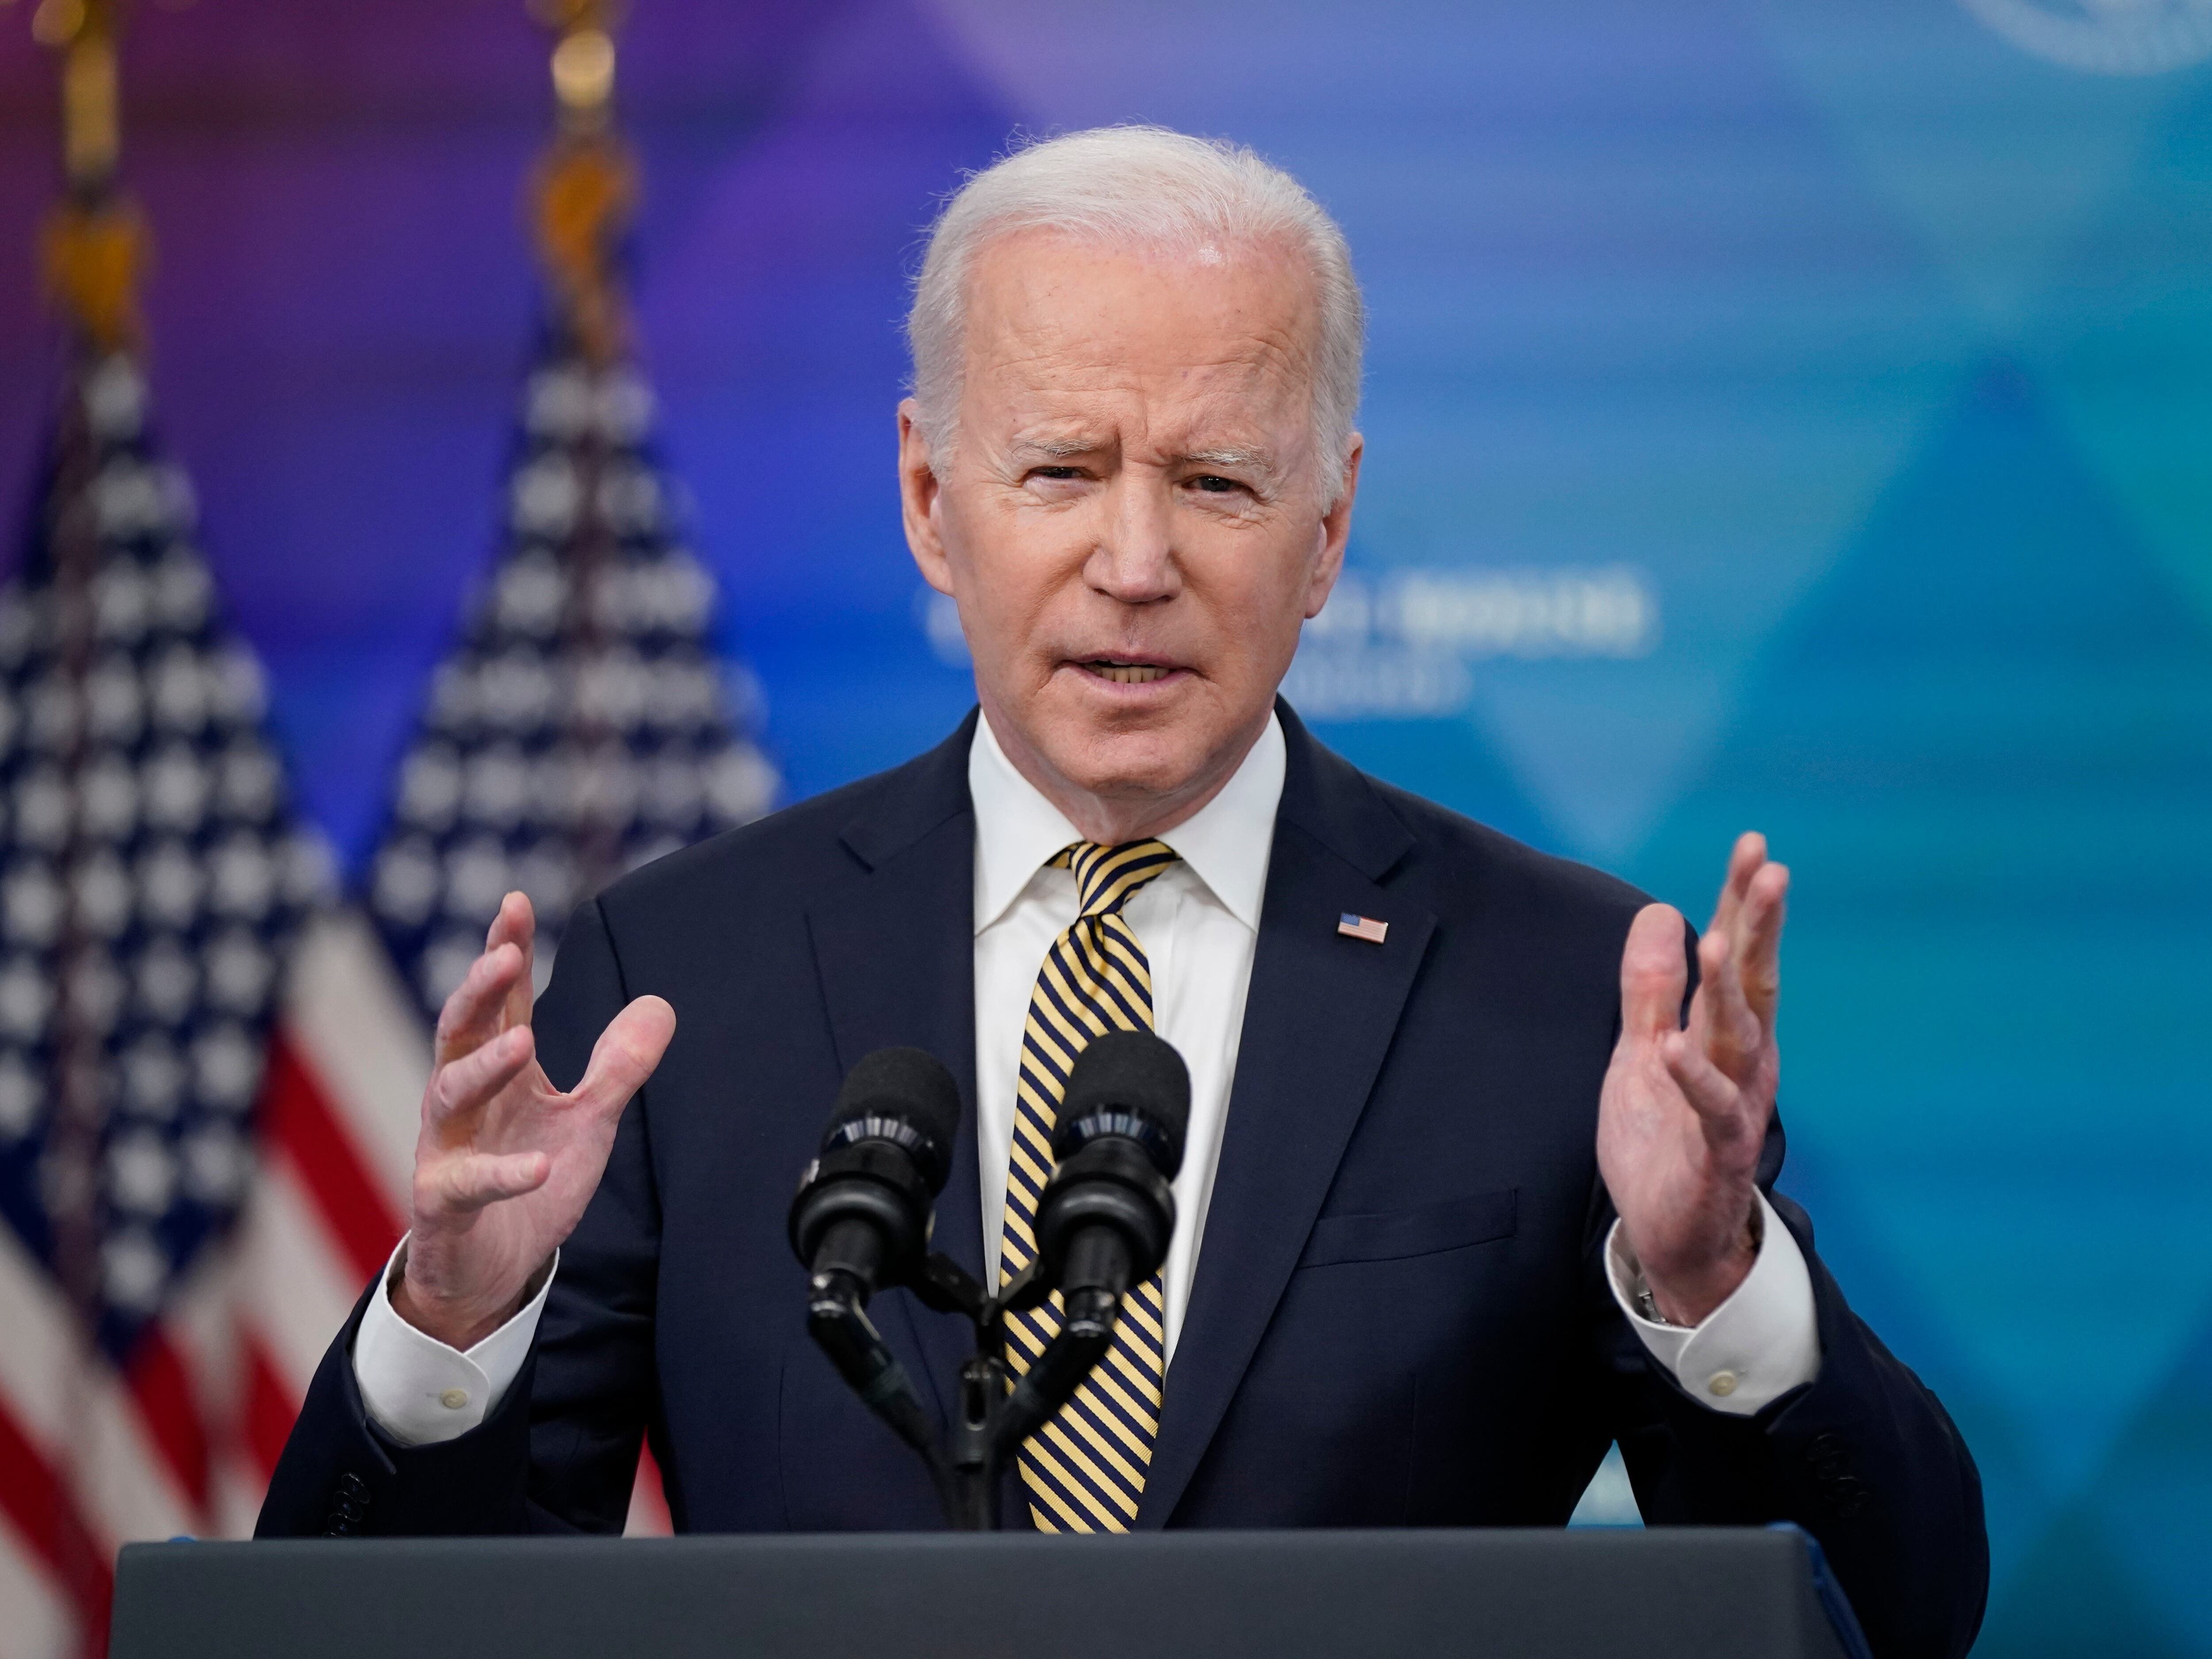 Vladimir Putin is a war criminal, says Joe Biden